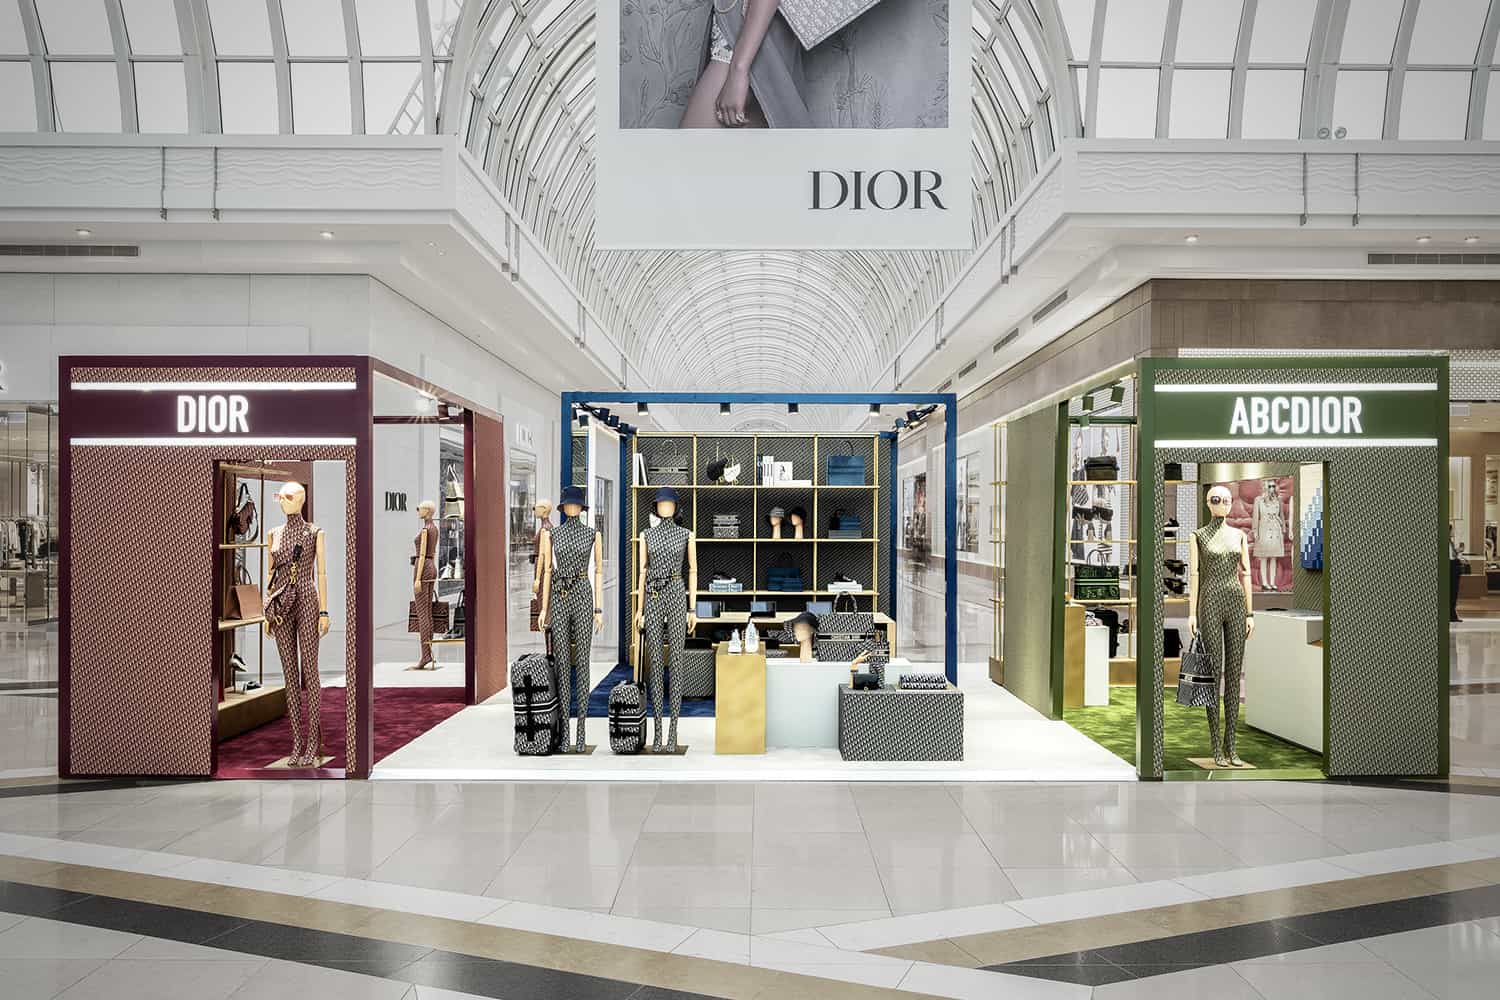 Dior pop up store image by Expocentric.com.au